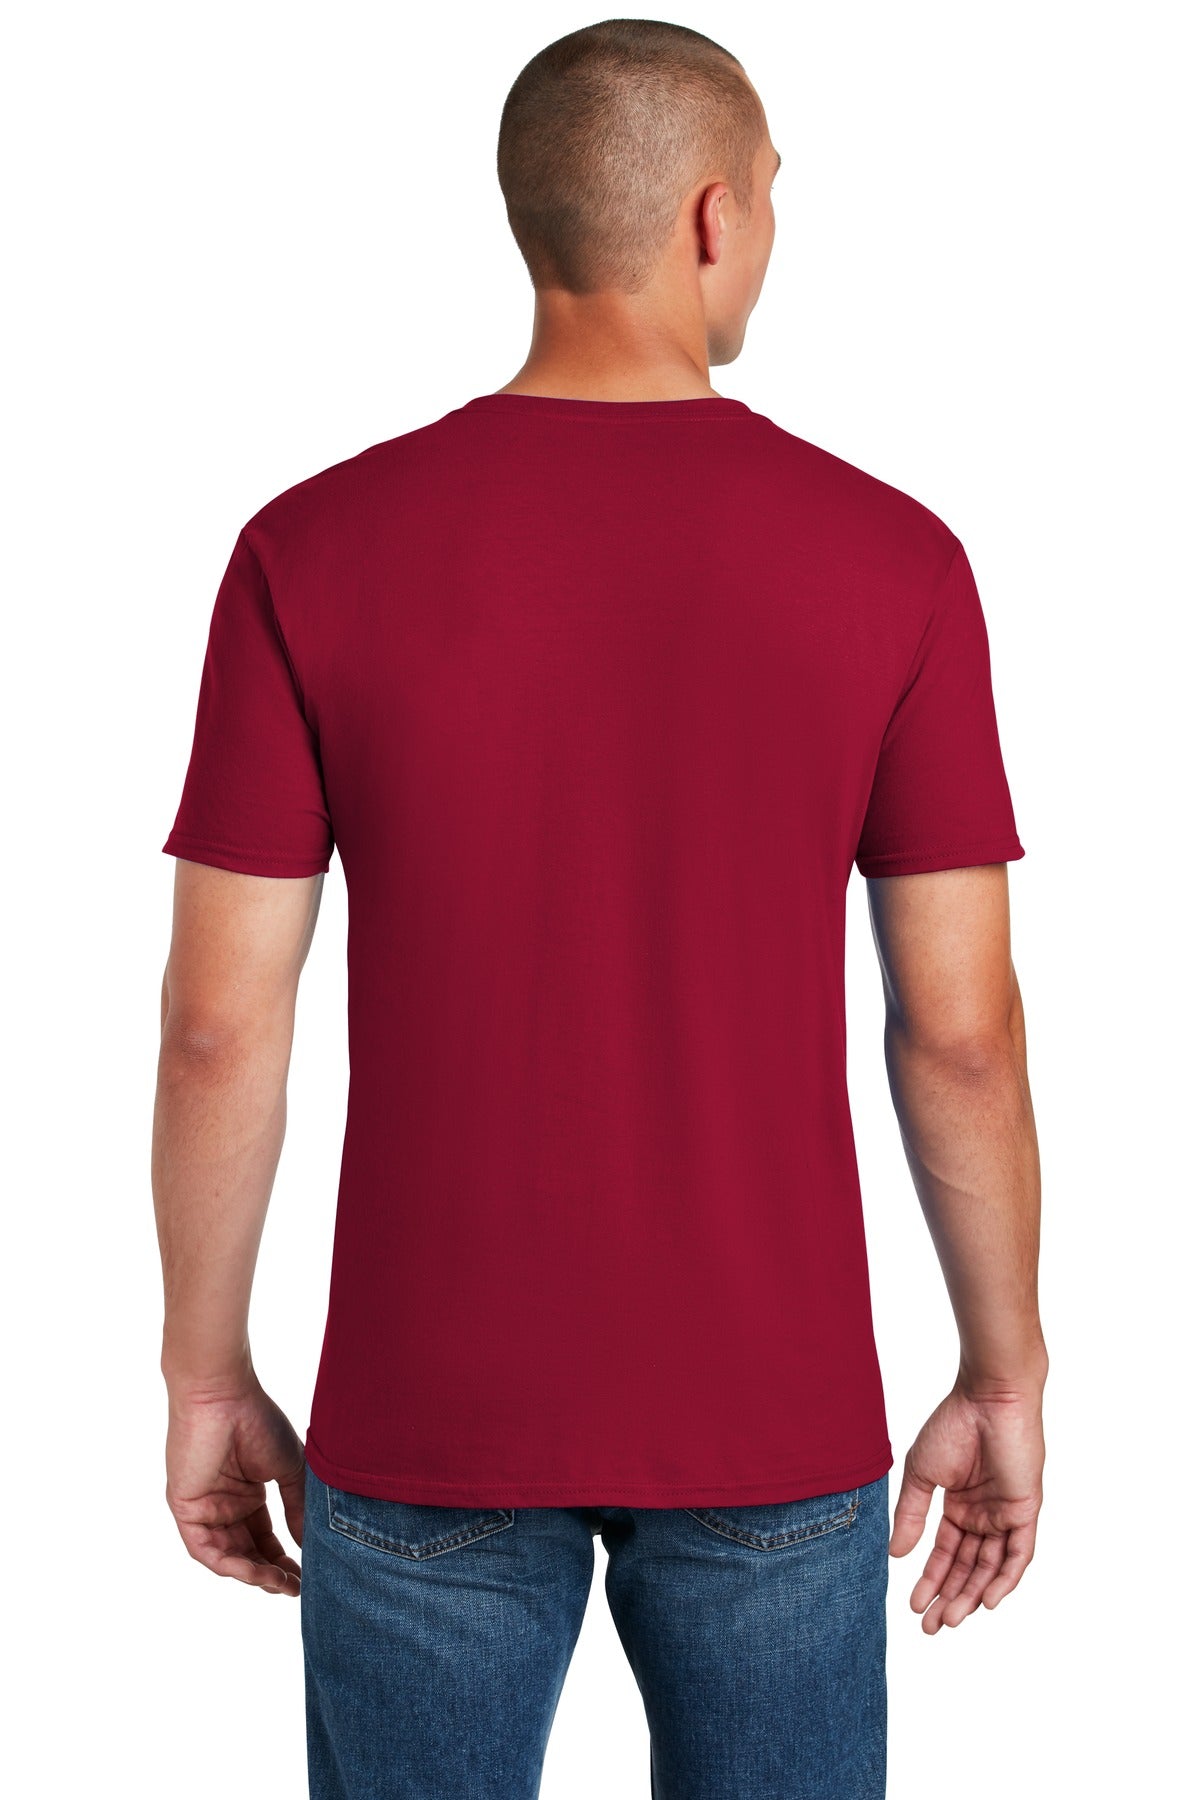 Gildan Softstyle® T-Shirt. 64000 [Cardinal] - DFW Impression